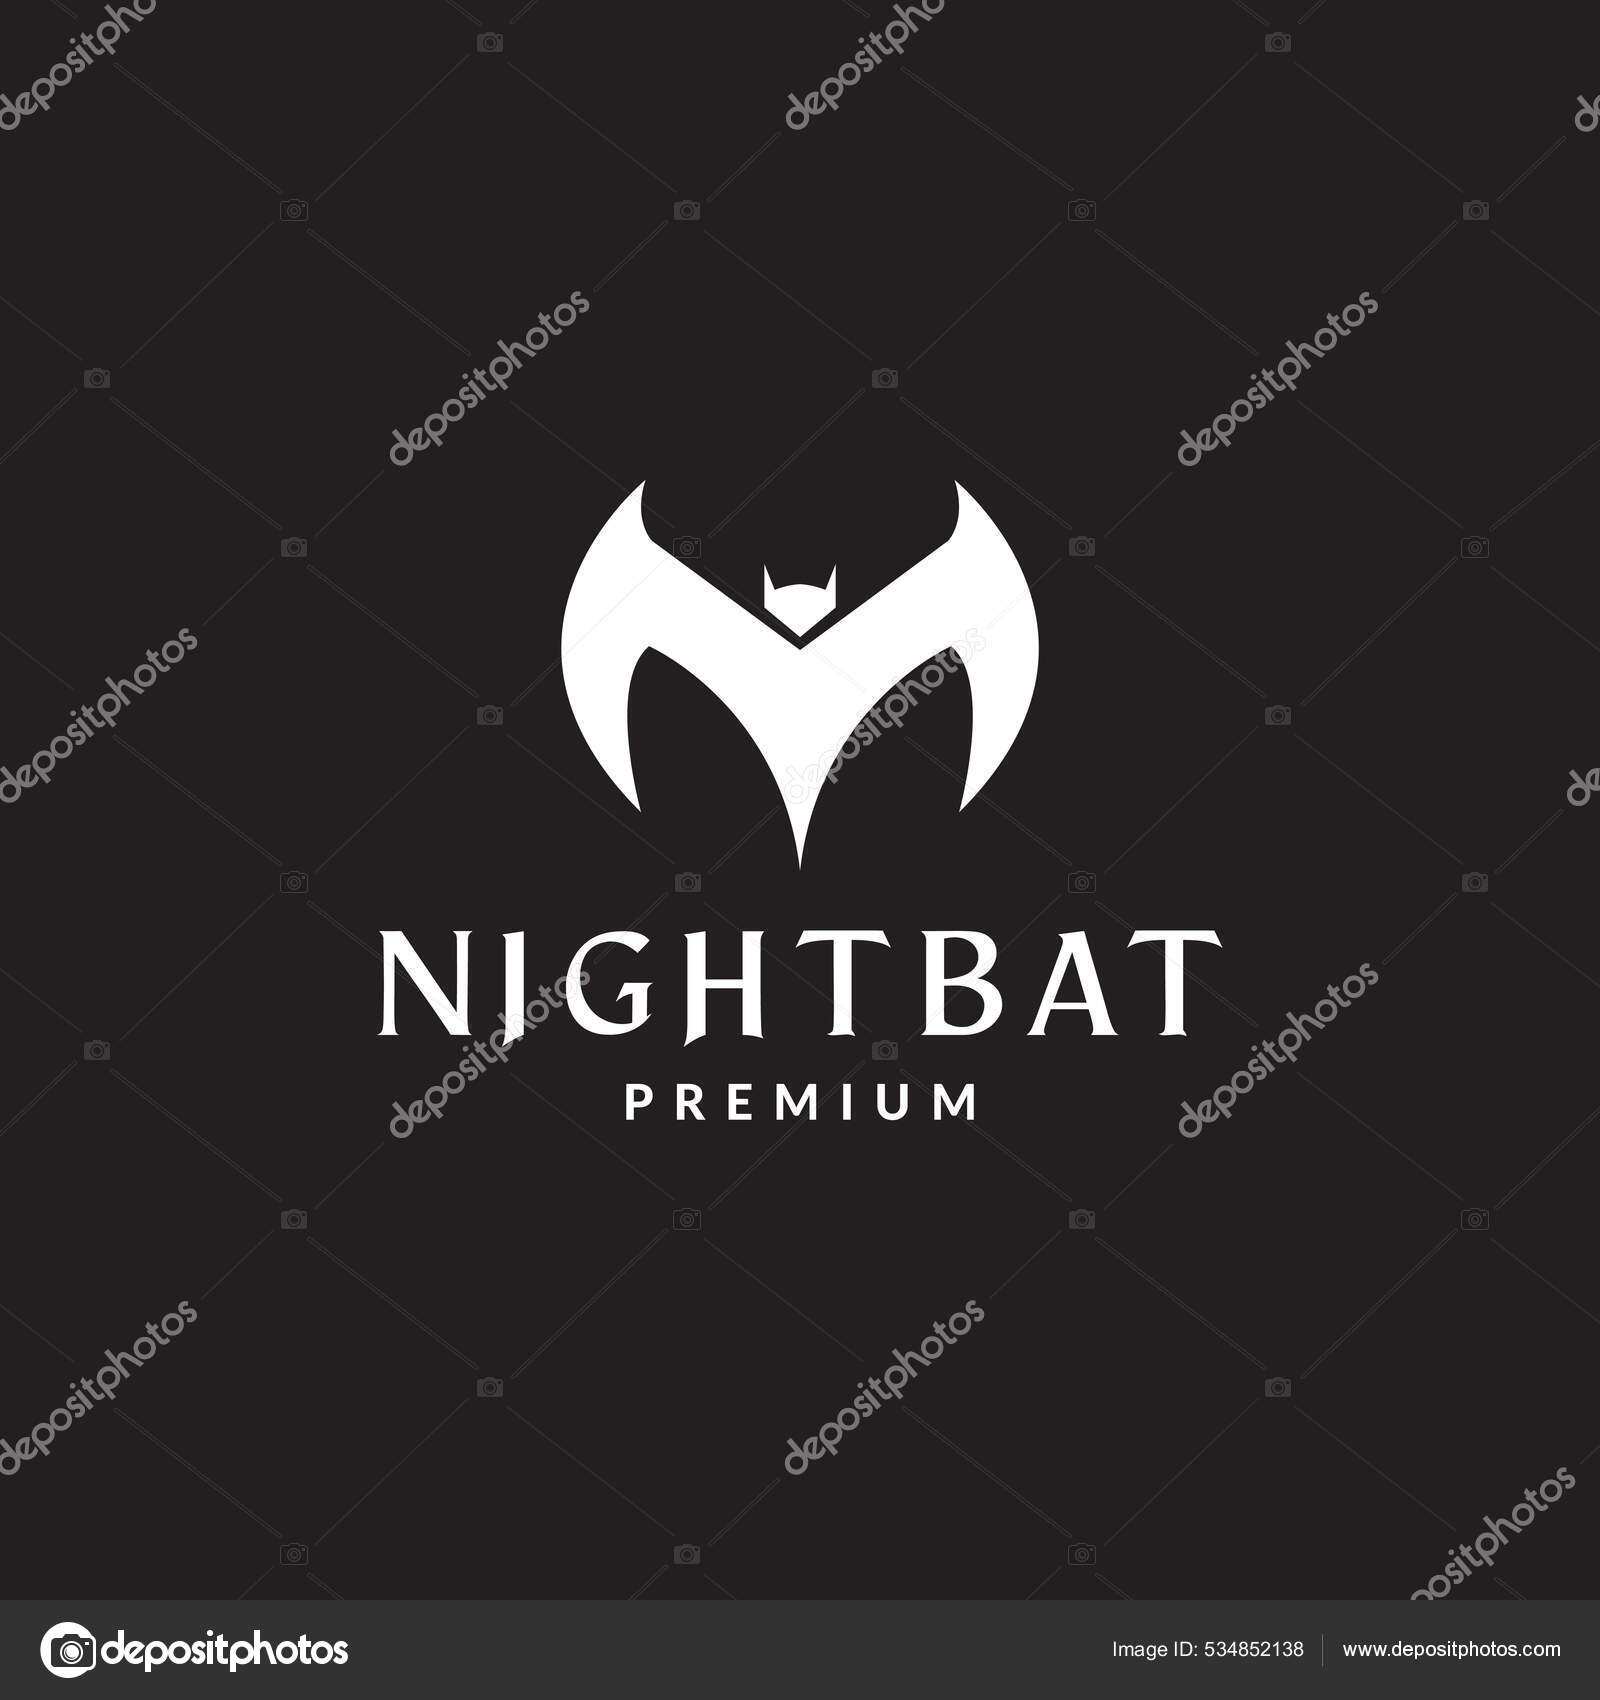 Máscara batman Vector Art Stock Images | Depositphotos